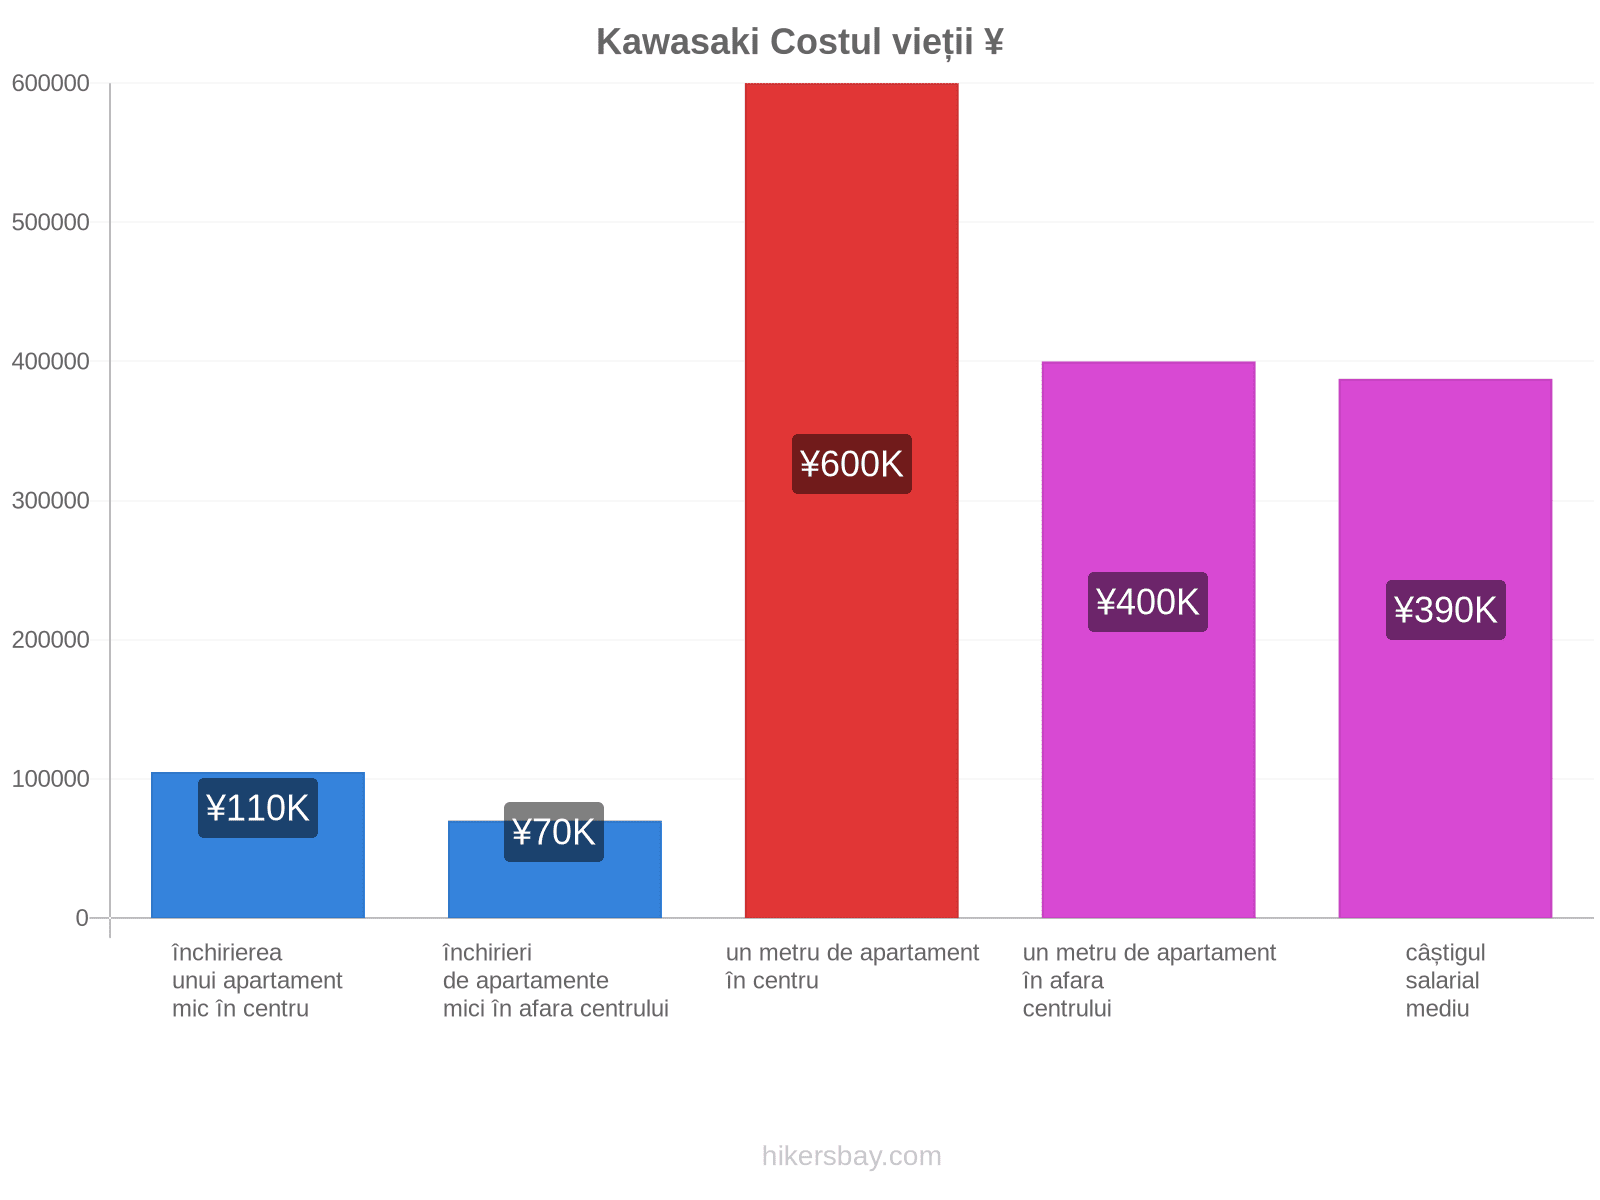 Kawasaki costul vieții hikersbay.com